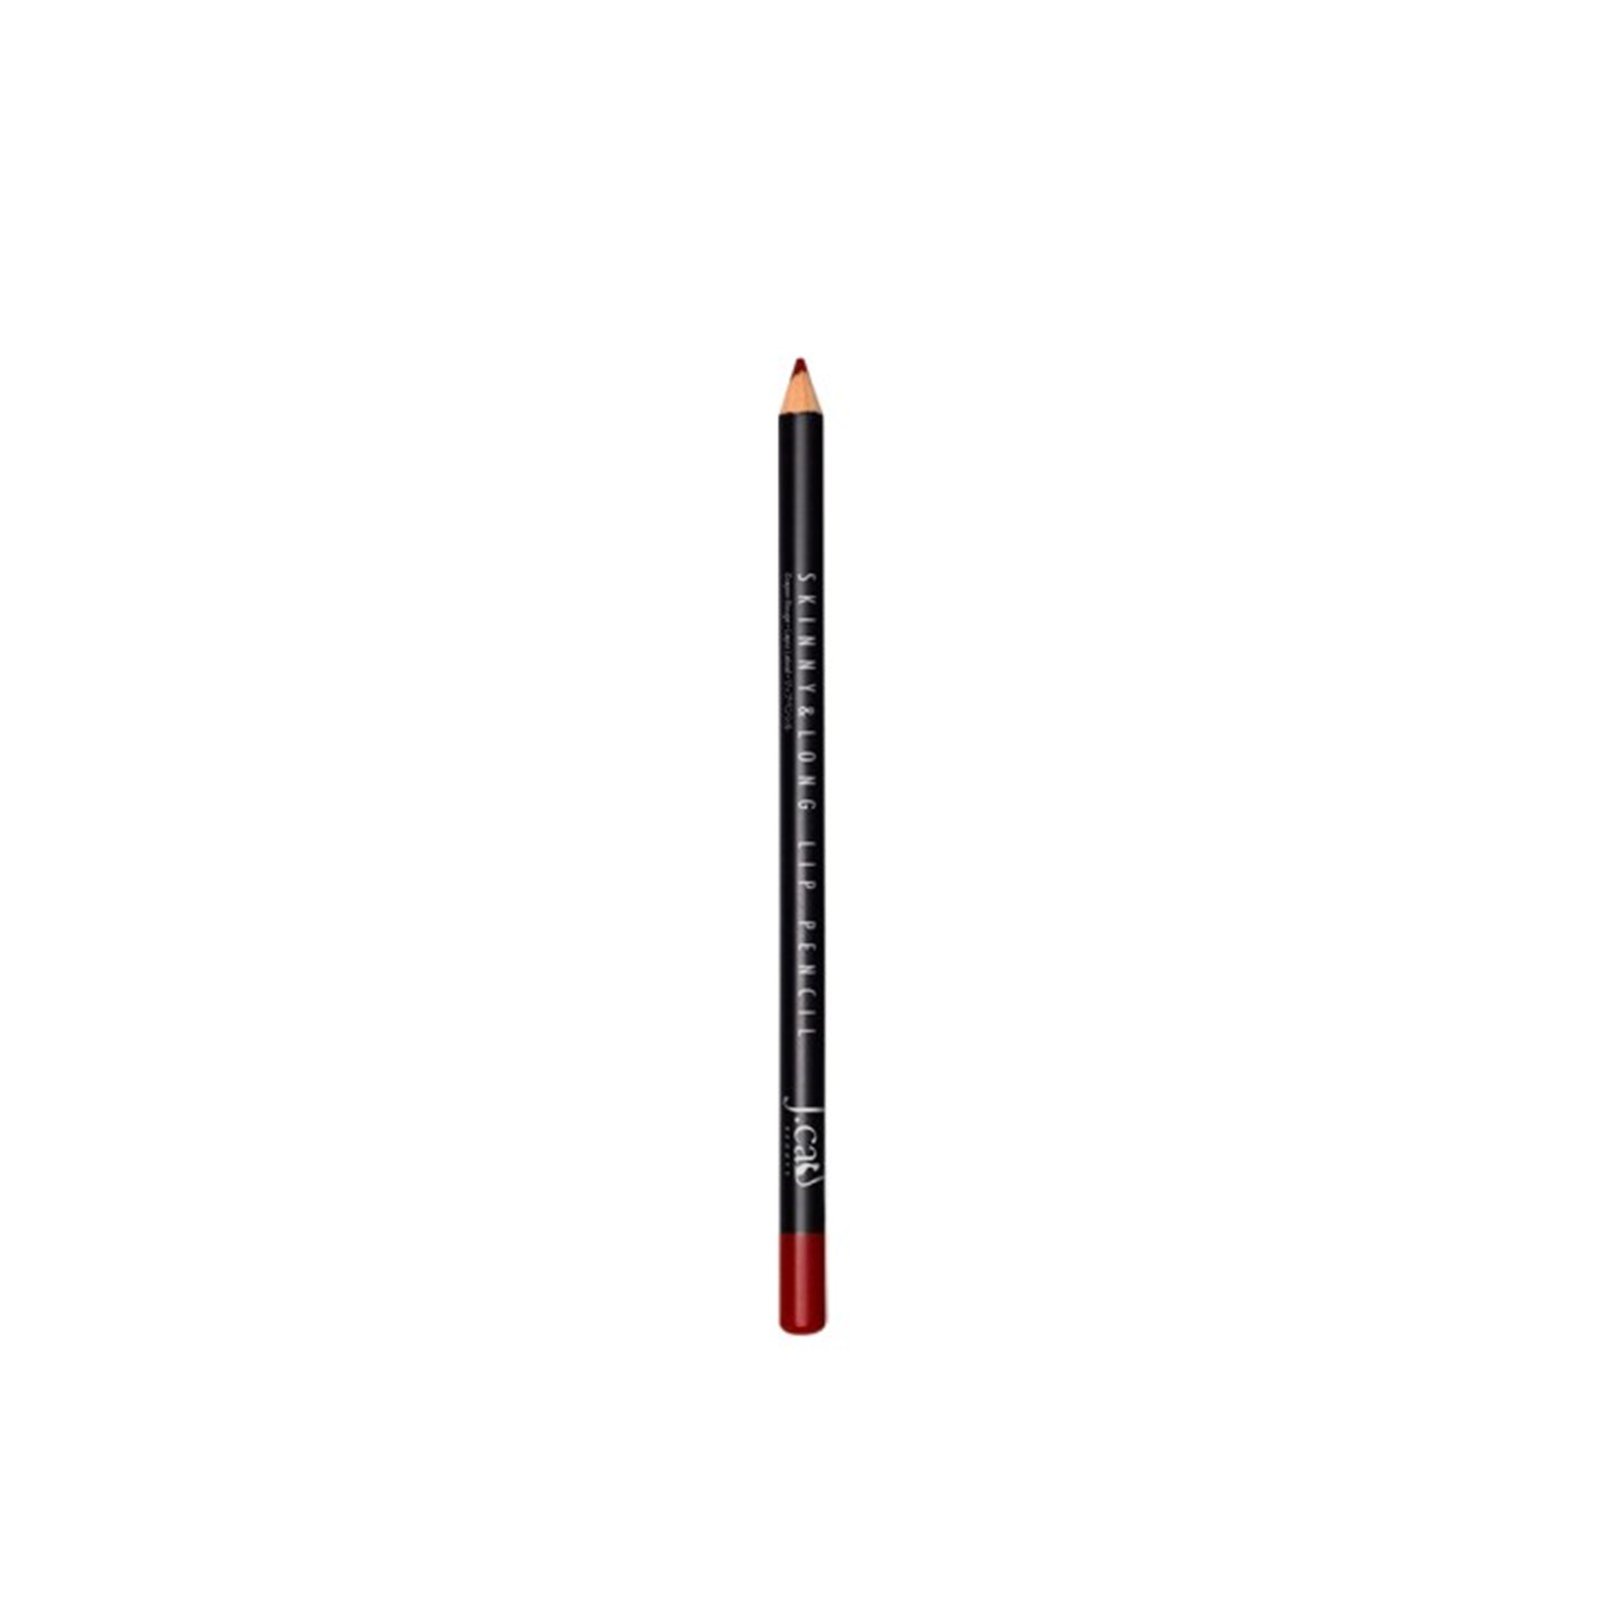 J.Cat Skinny & Long Lip Pencil 104 Electric Crimson 2g (0.08 oz)